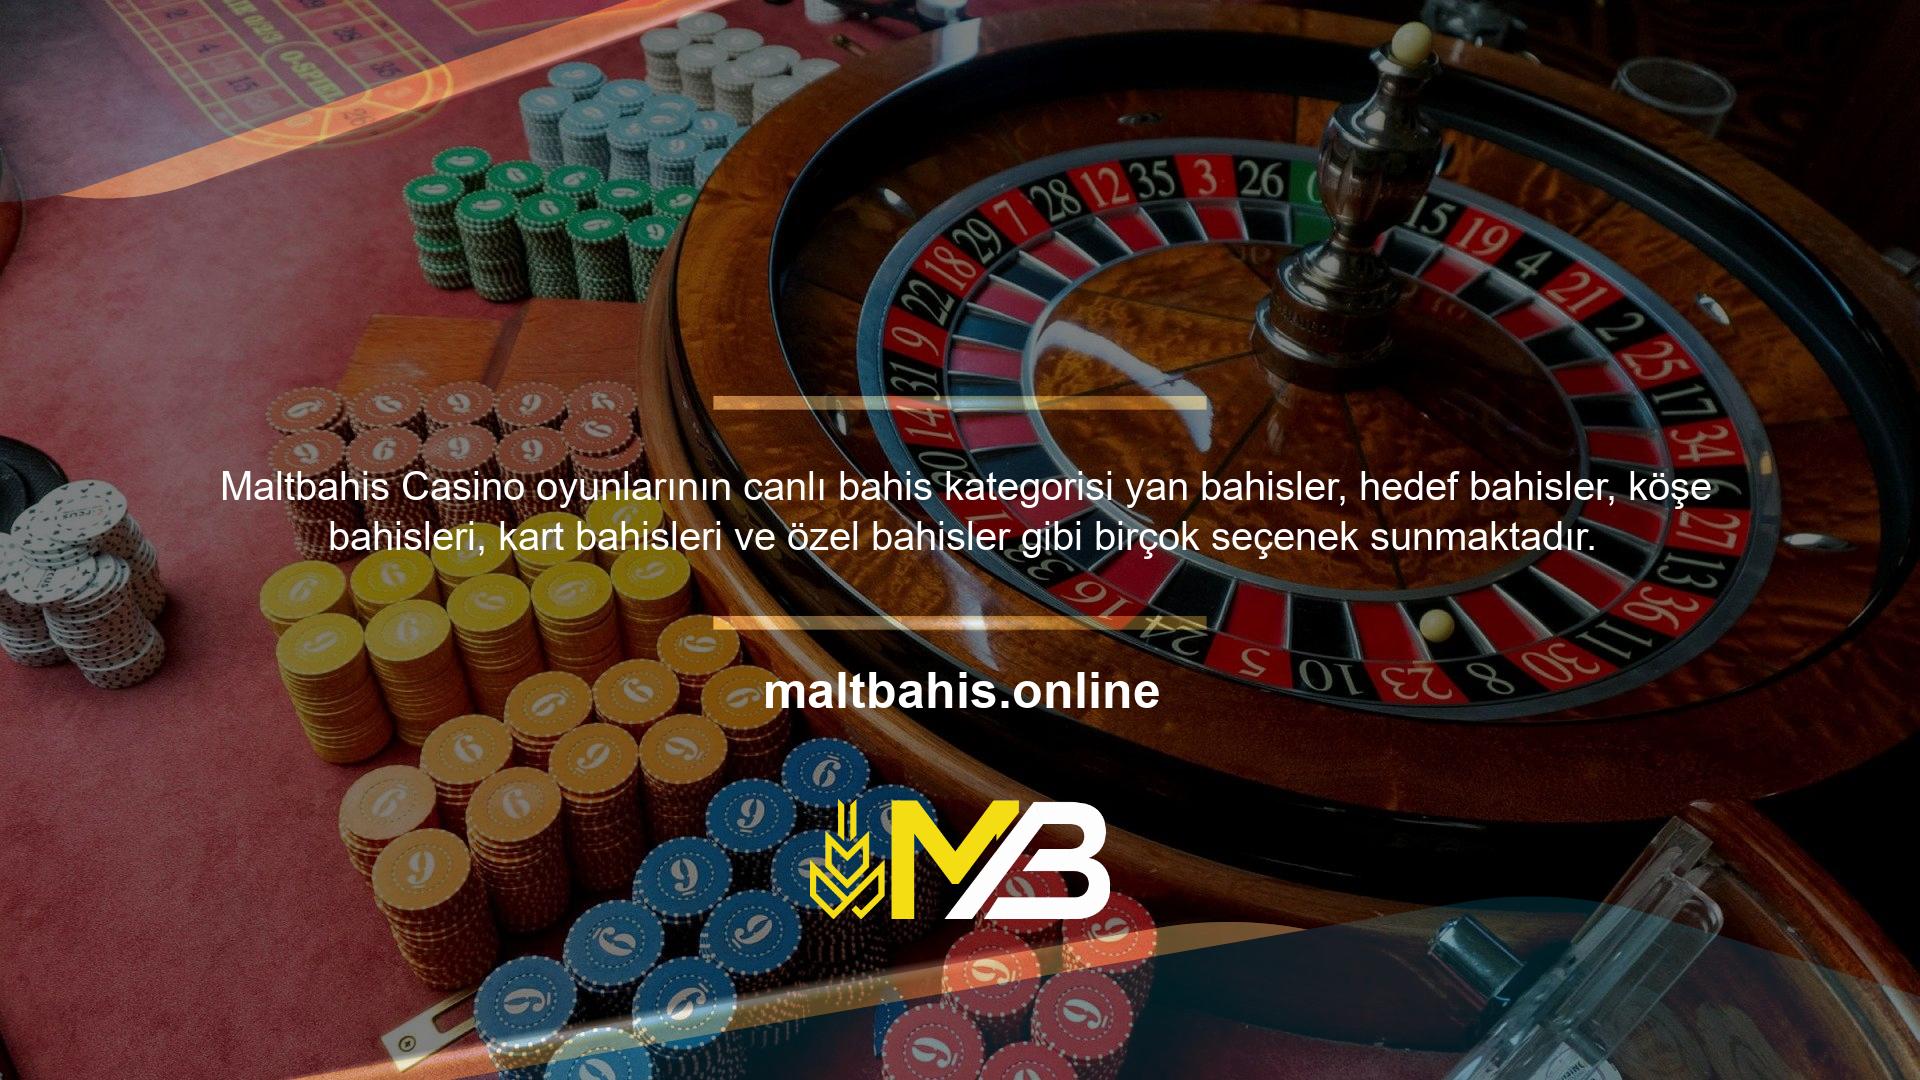 Maltbahis Canlı Casino